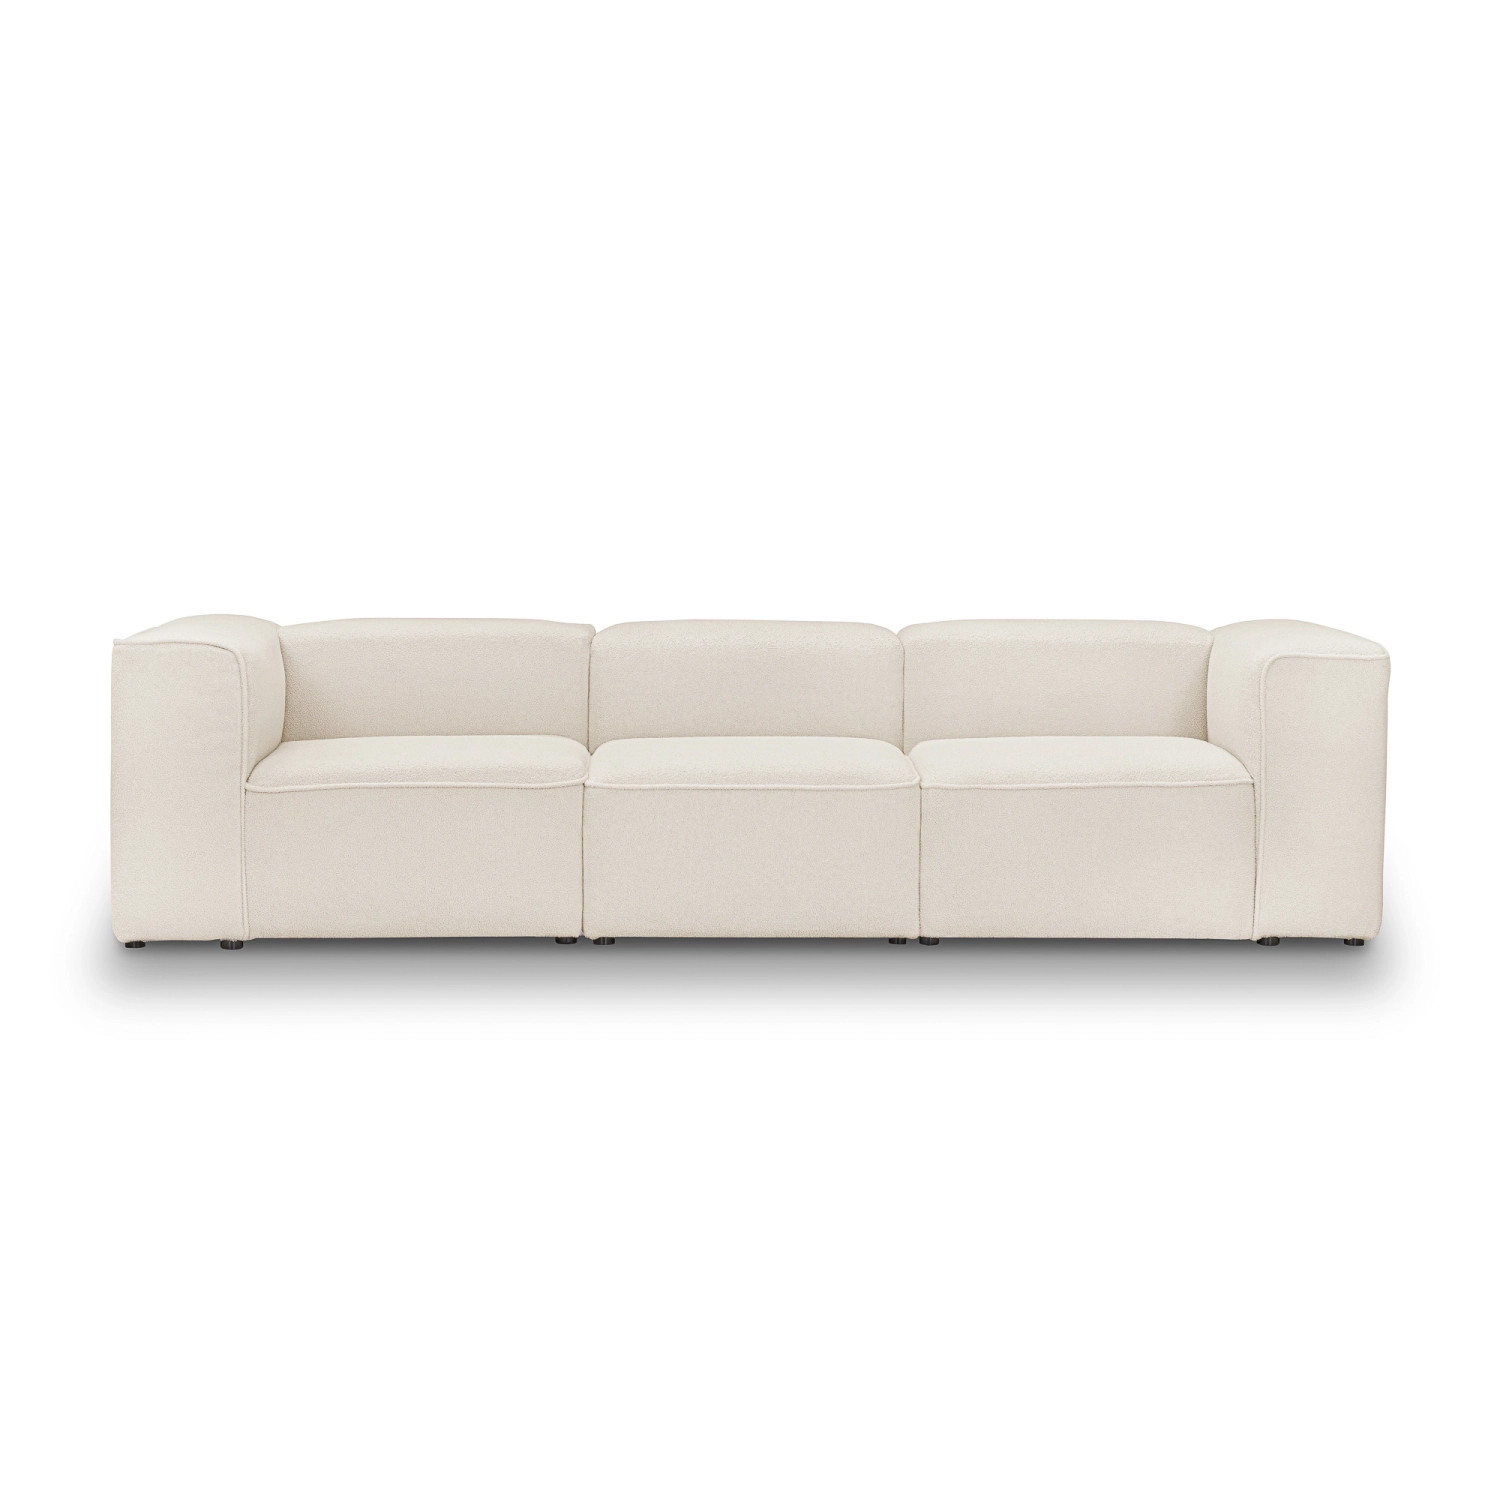 Luss L sofa modułowa 3 osobowa 330x100 cm, tkanina boucle